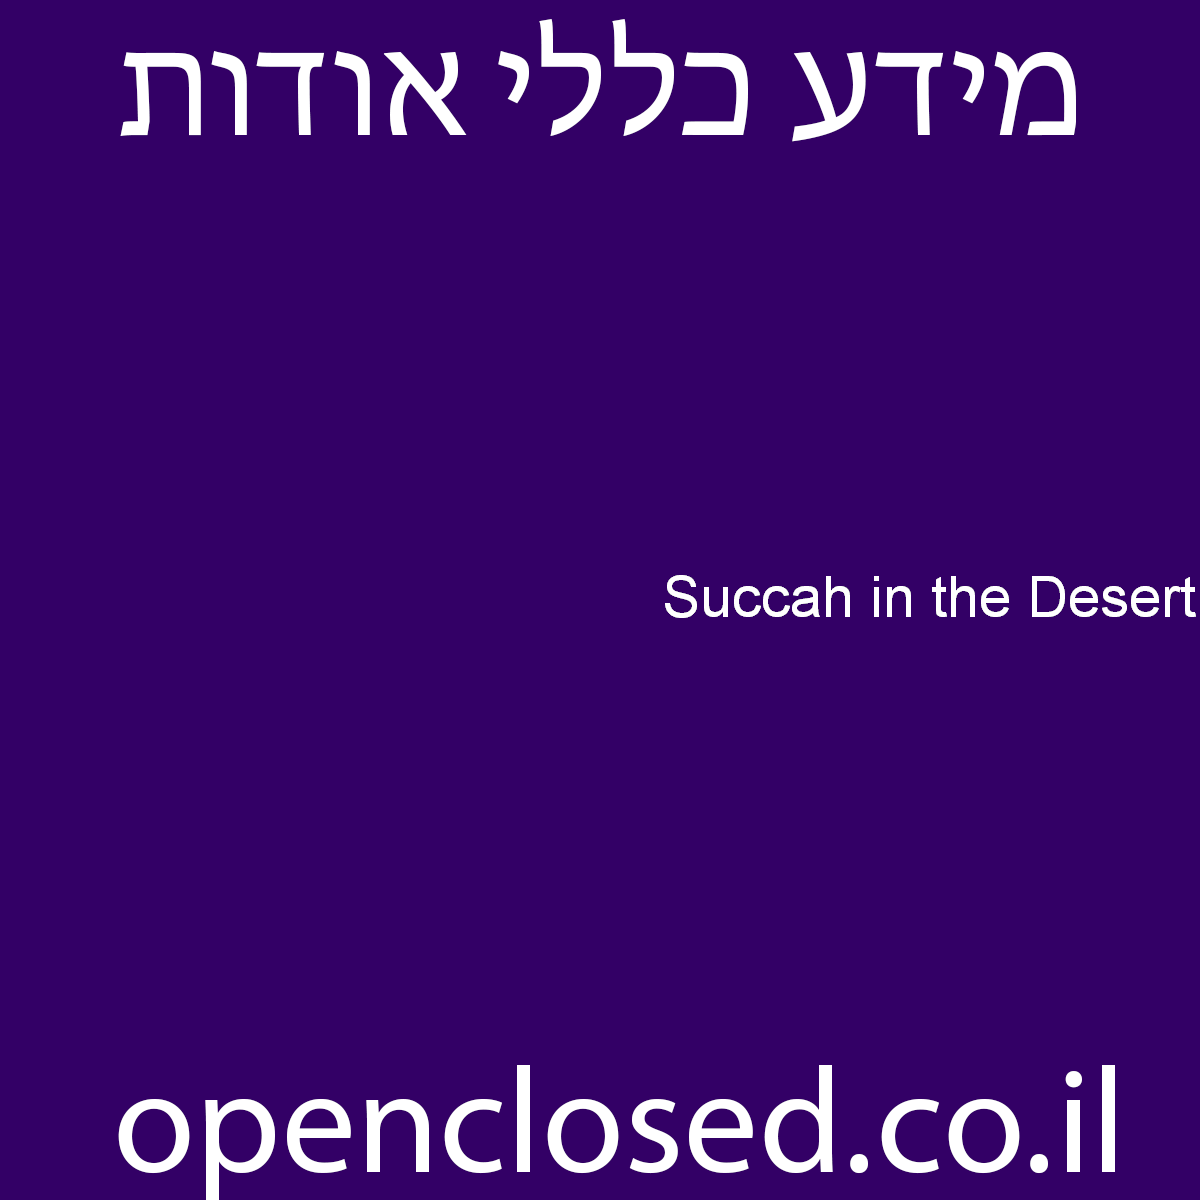 Succah in the Desert